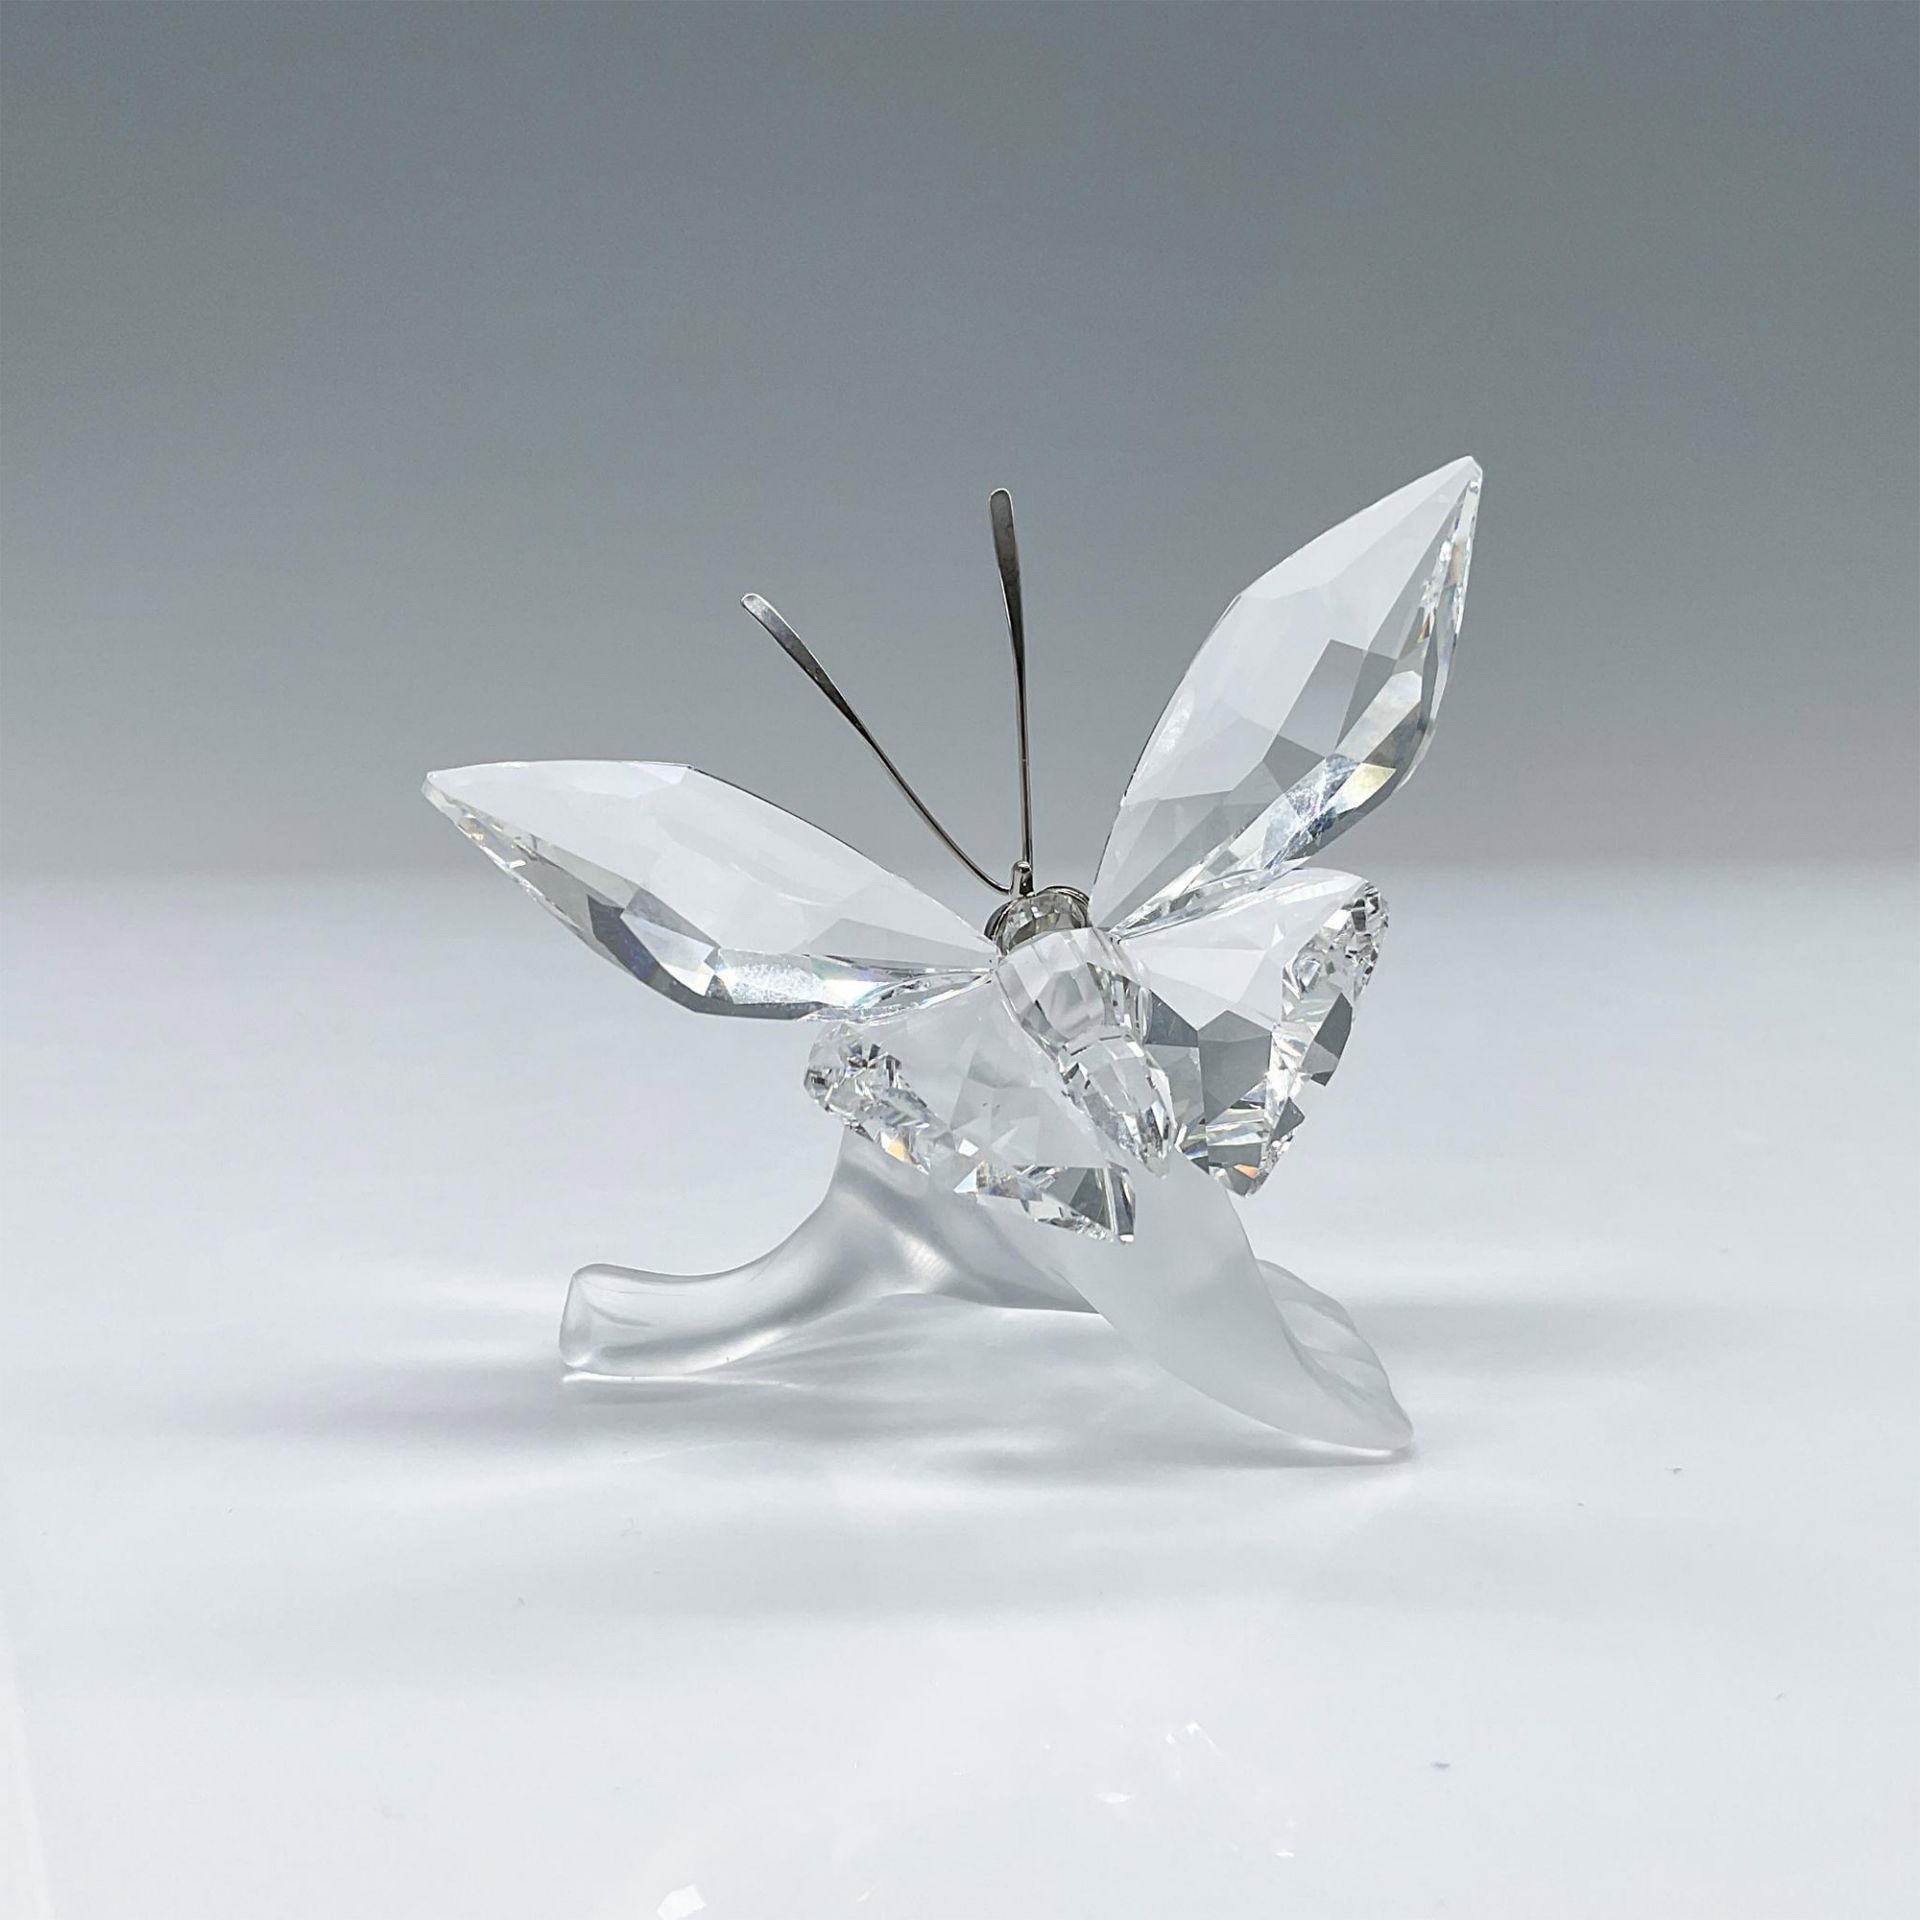 Swarovski Crystal Figurine, Butterfly on Leaf - Image 2 of 4